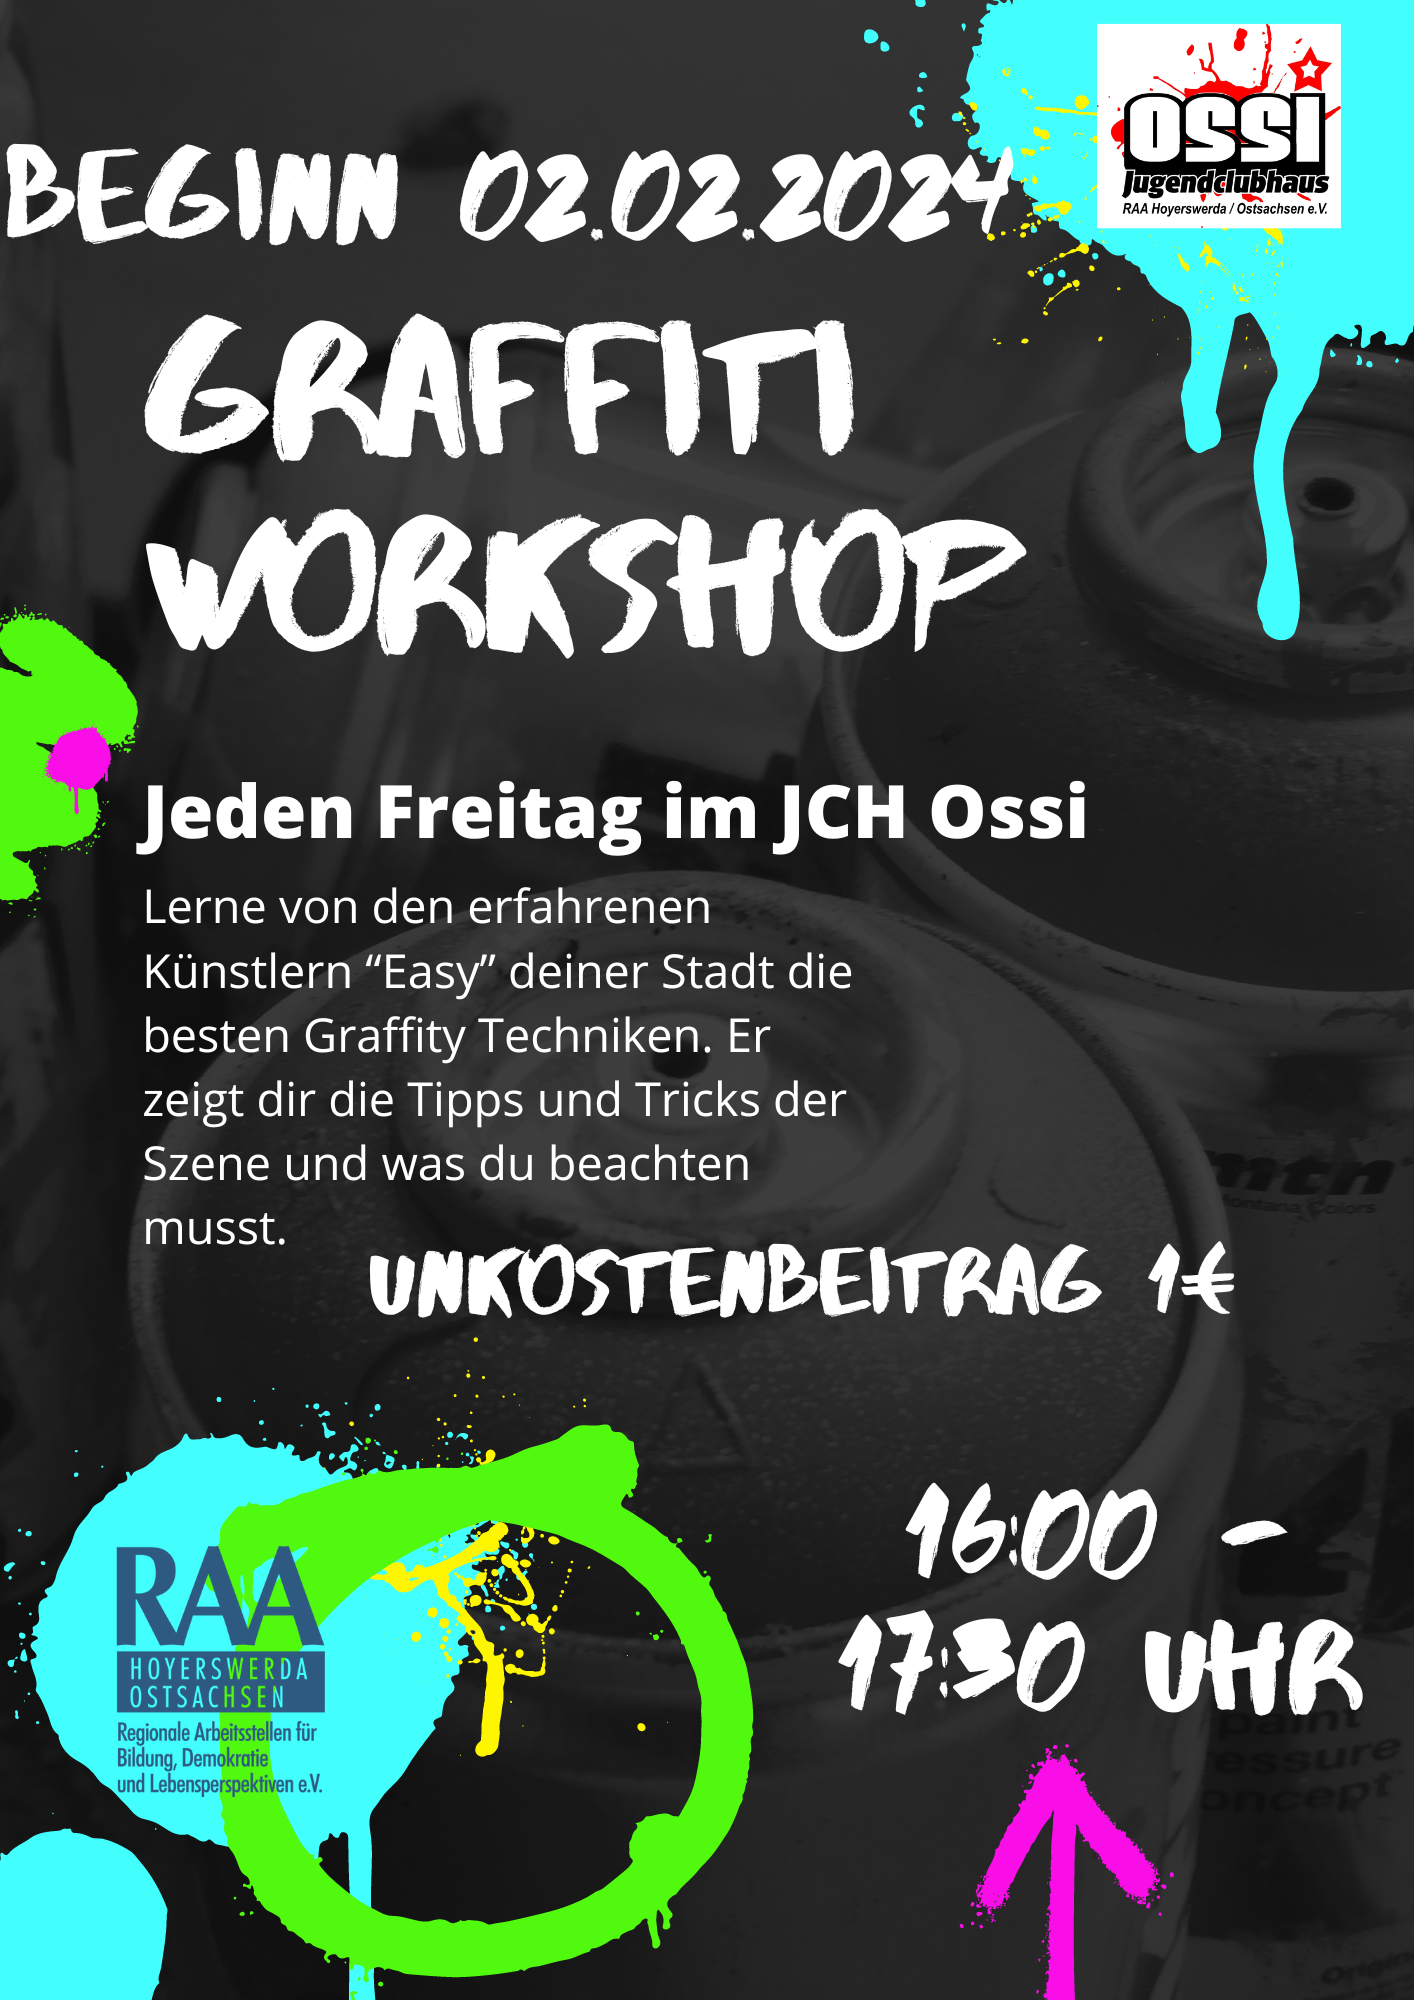 Graffiti Workshop im Ossi